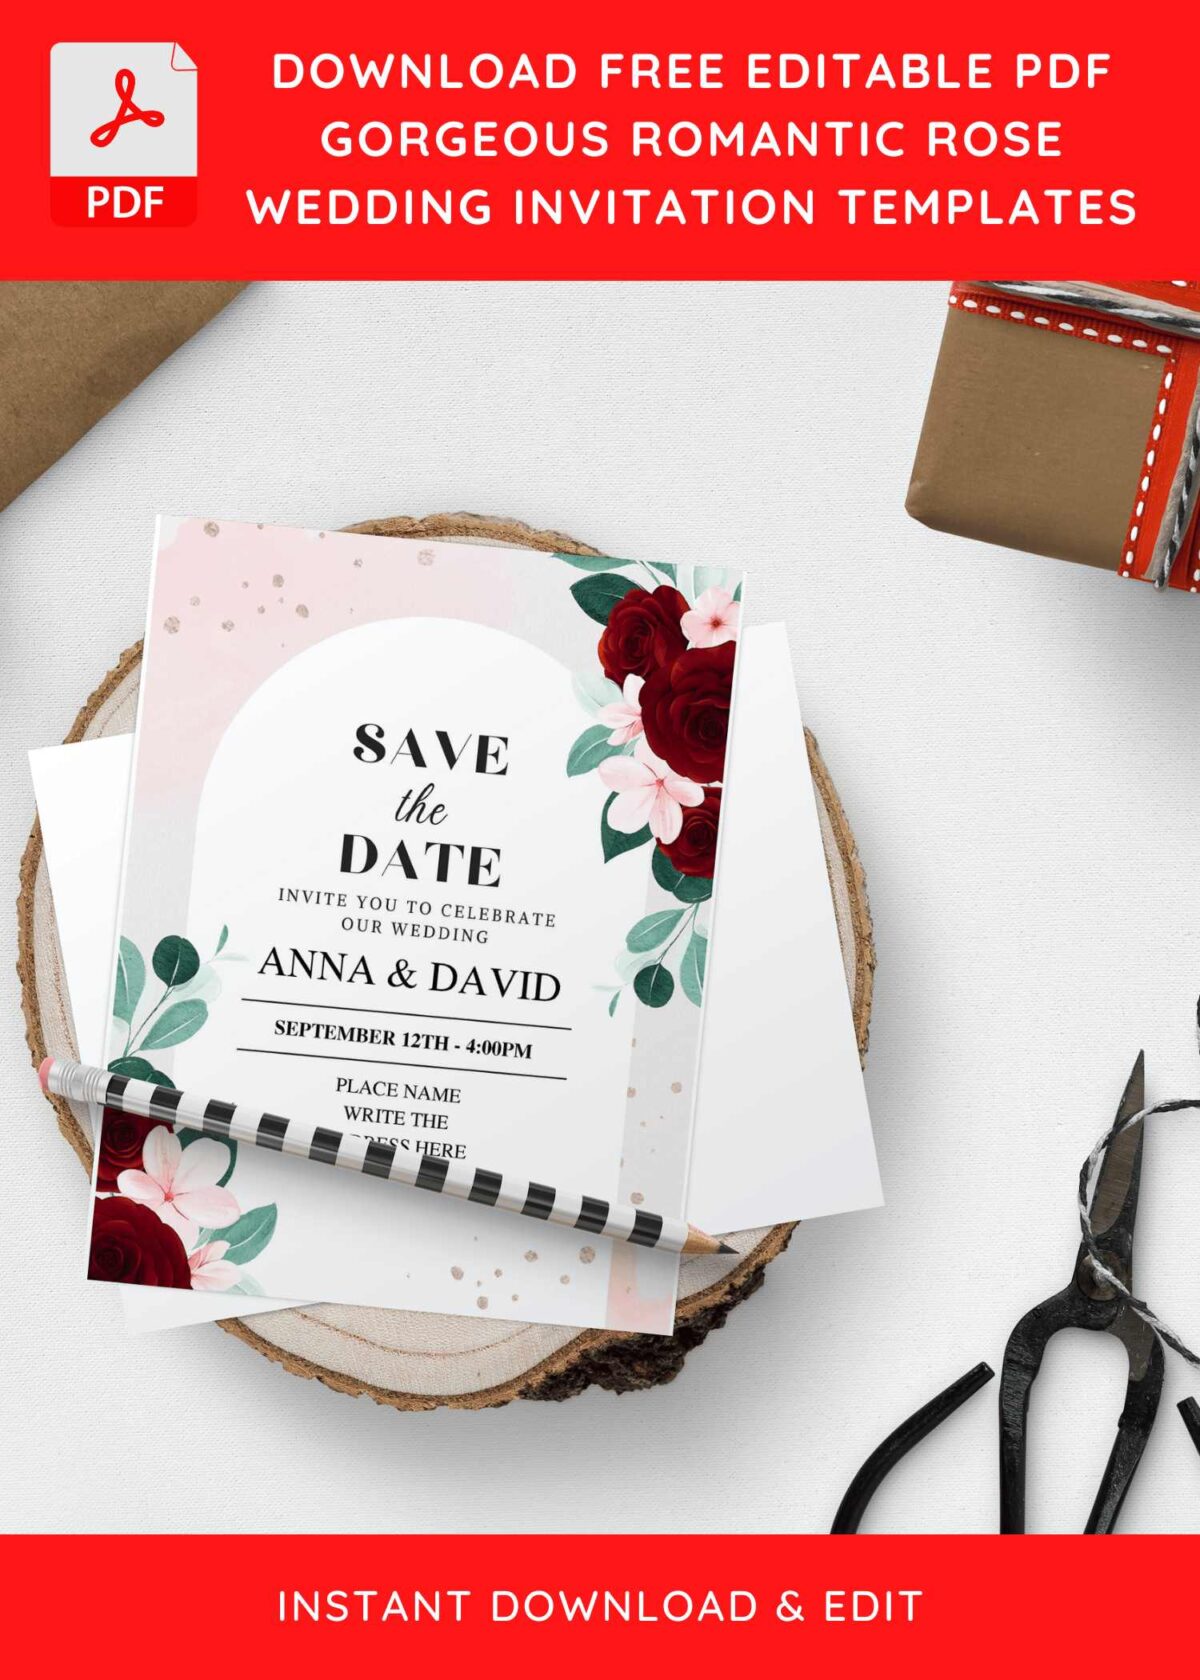 (Free Editable PDF) Romantic Bouquet Wedding Invitation Templates I